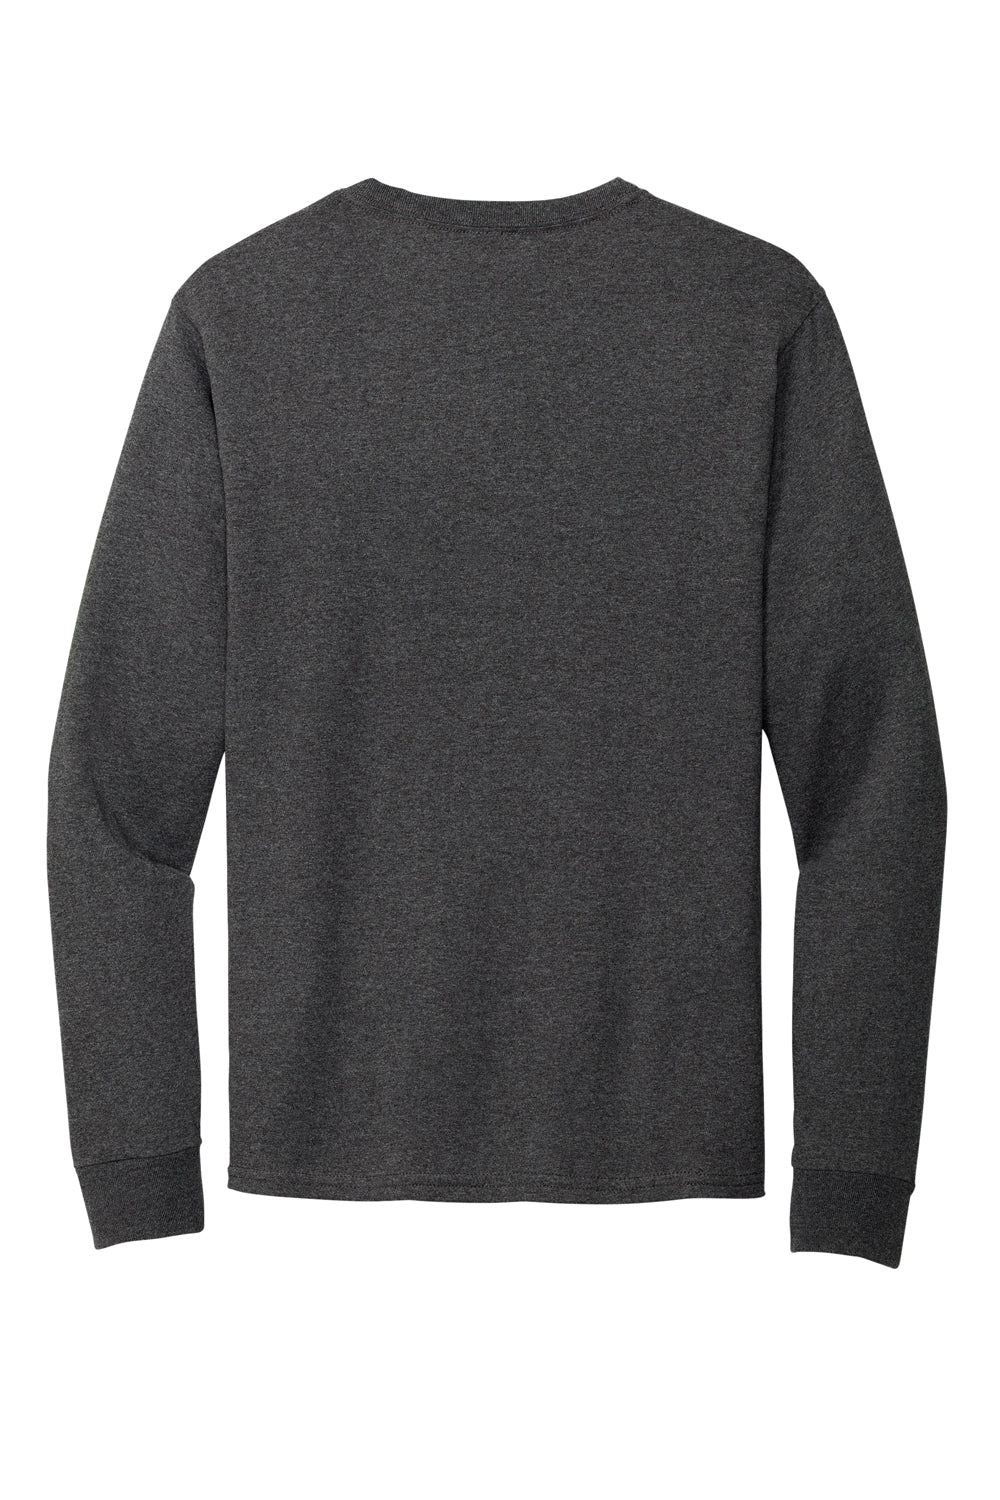 Hanes 5286 Mens ComfortSoft Long Sleeve Crewneck T-Shirt Heather Charcoal Grey Flat Back